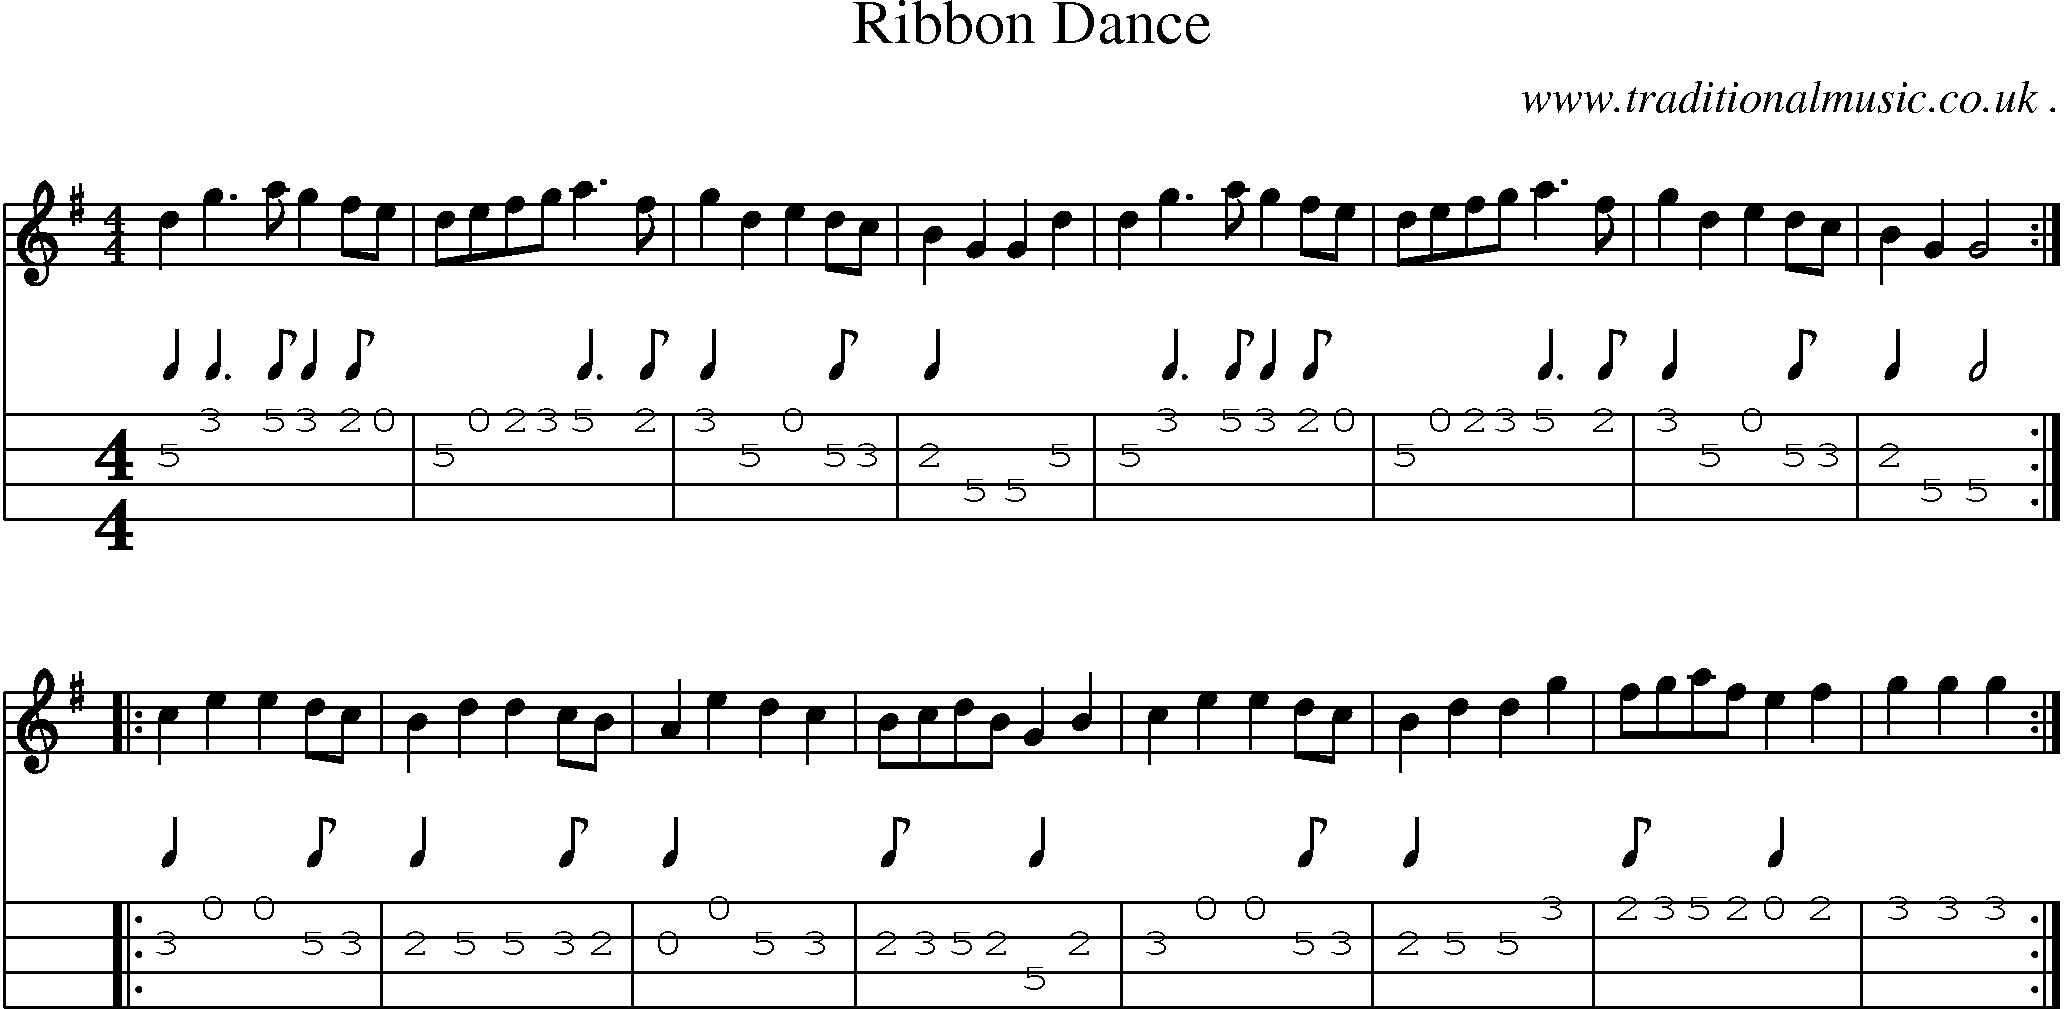 Sheet-Music and Mandolin Tabs for Ribbon Dance